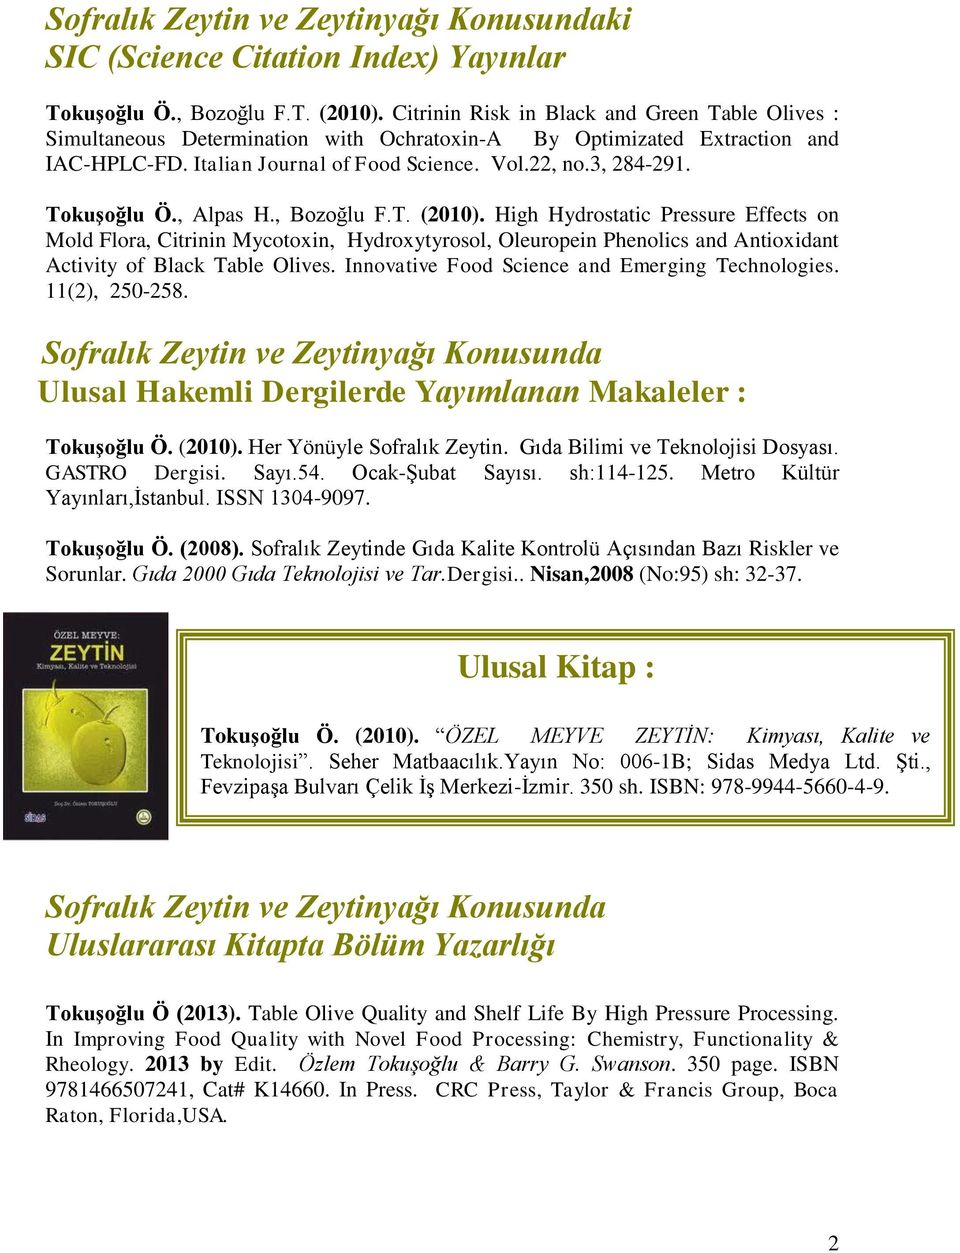 Tokuşoğlu Ö., Alpas H., Bozoğlu F.T. (2010). High Hydrostatic Pressure Effects on Mold Flora, Citrinin Mycotoxin, Hydroxytyrosol, Oleuropein Phenolics and Antioxidant Activity of Black Table Olives.